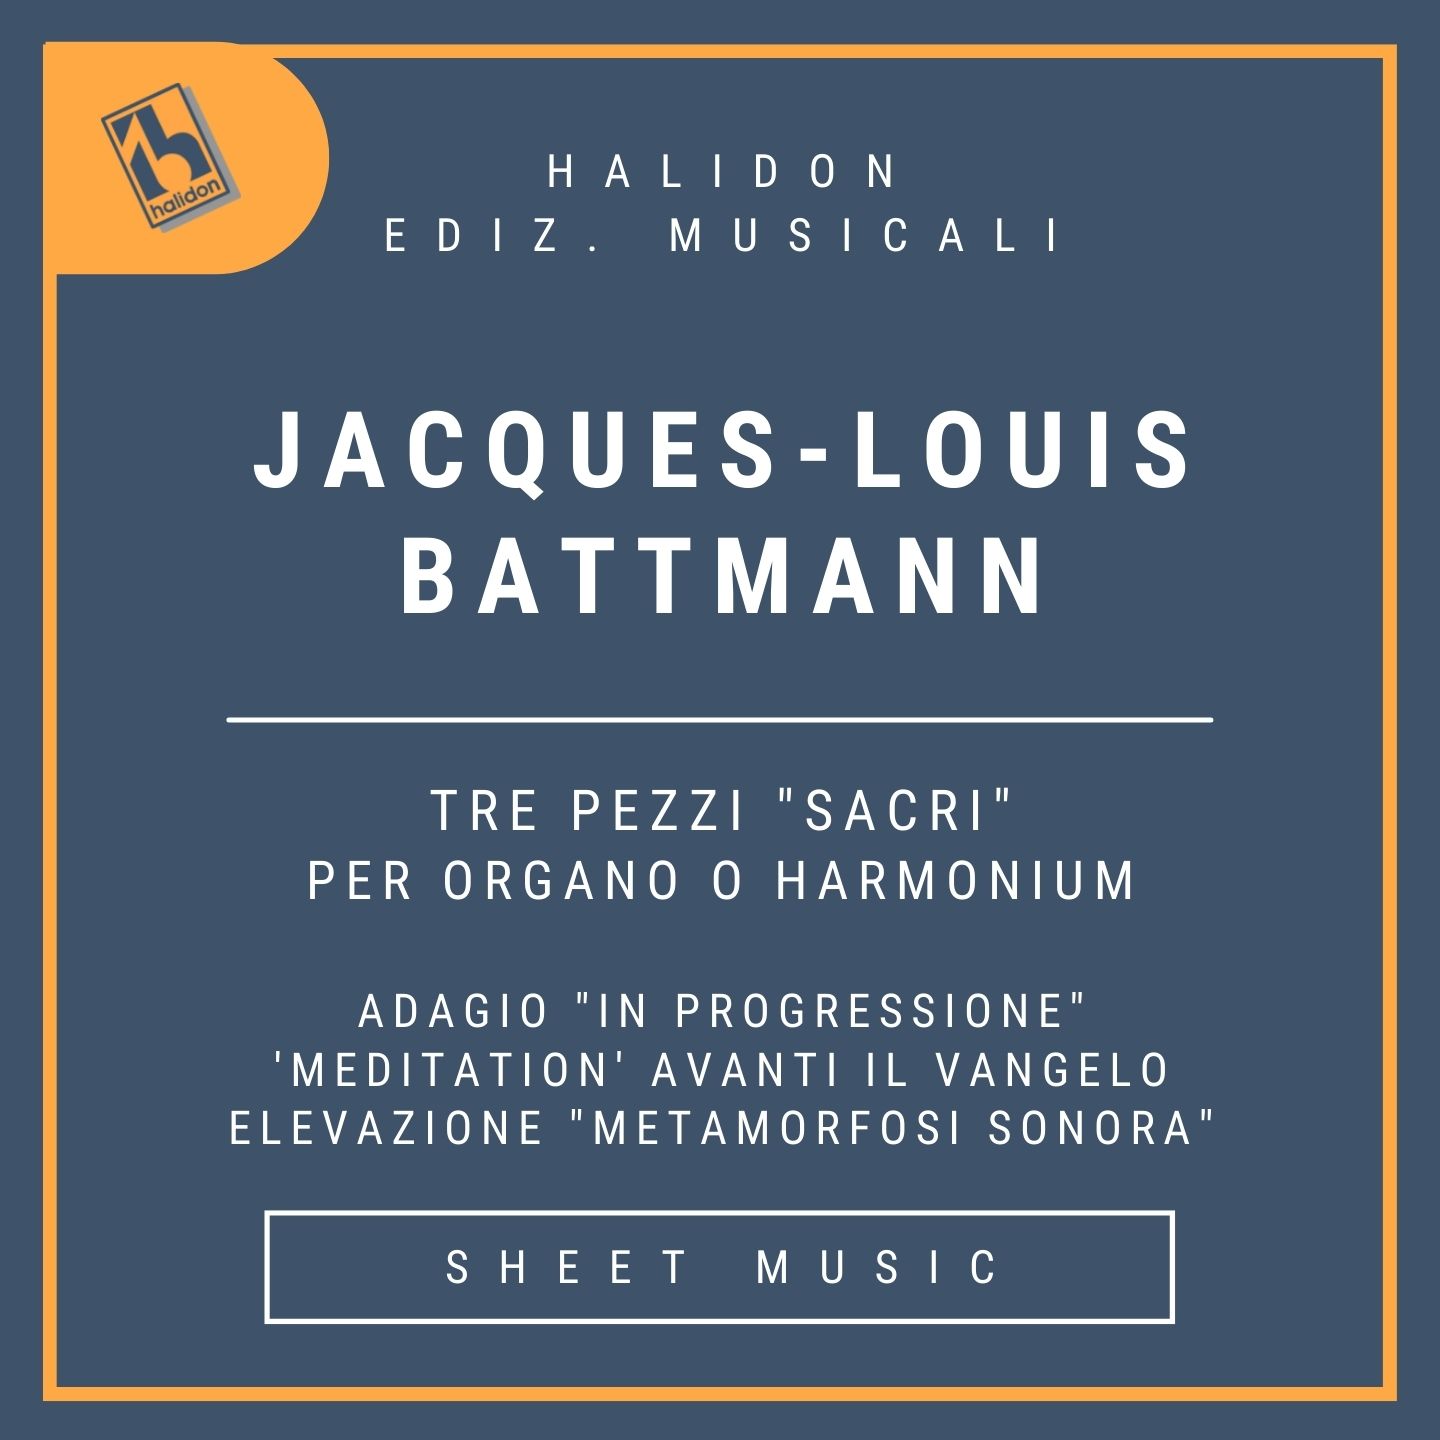 Jacques-Louis Battmann - Tre pezzi sacri per organo